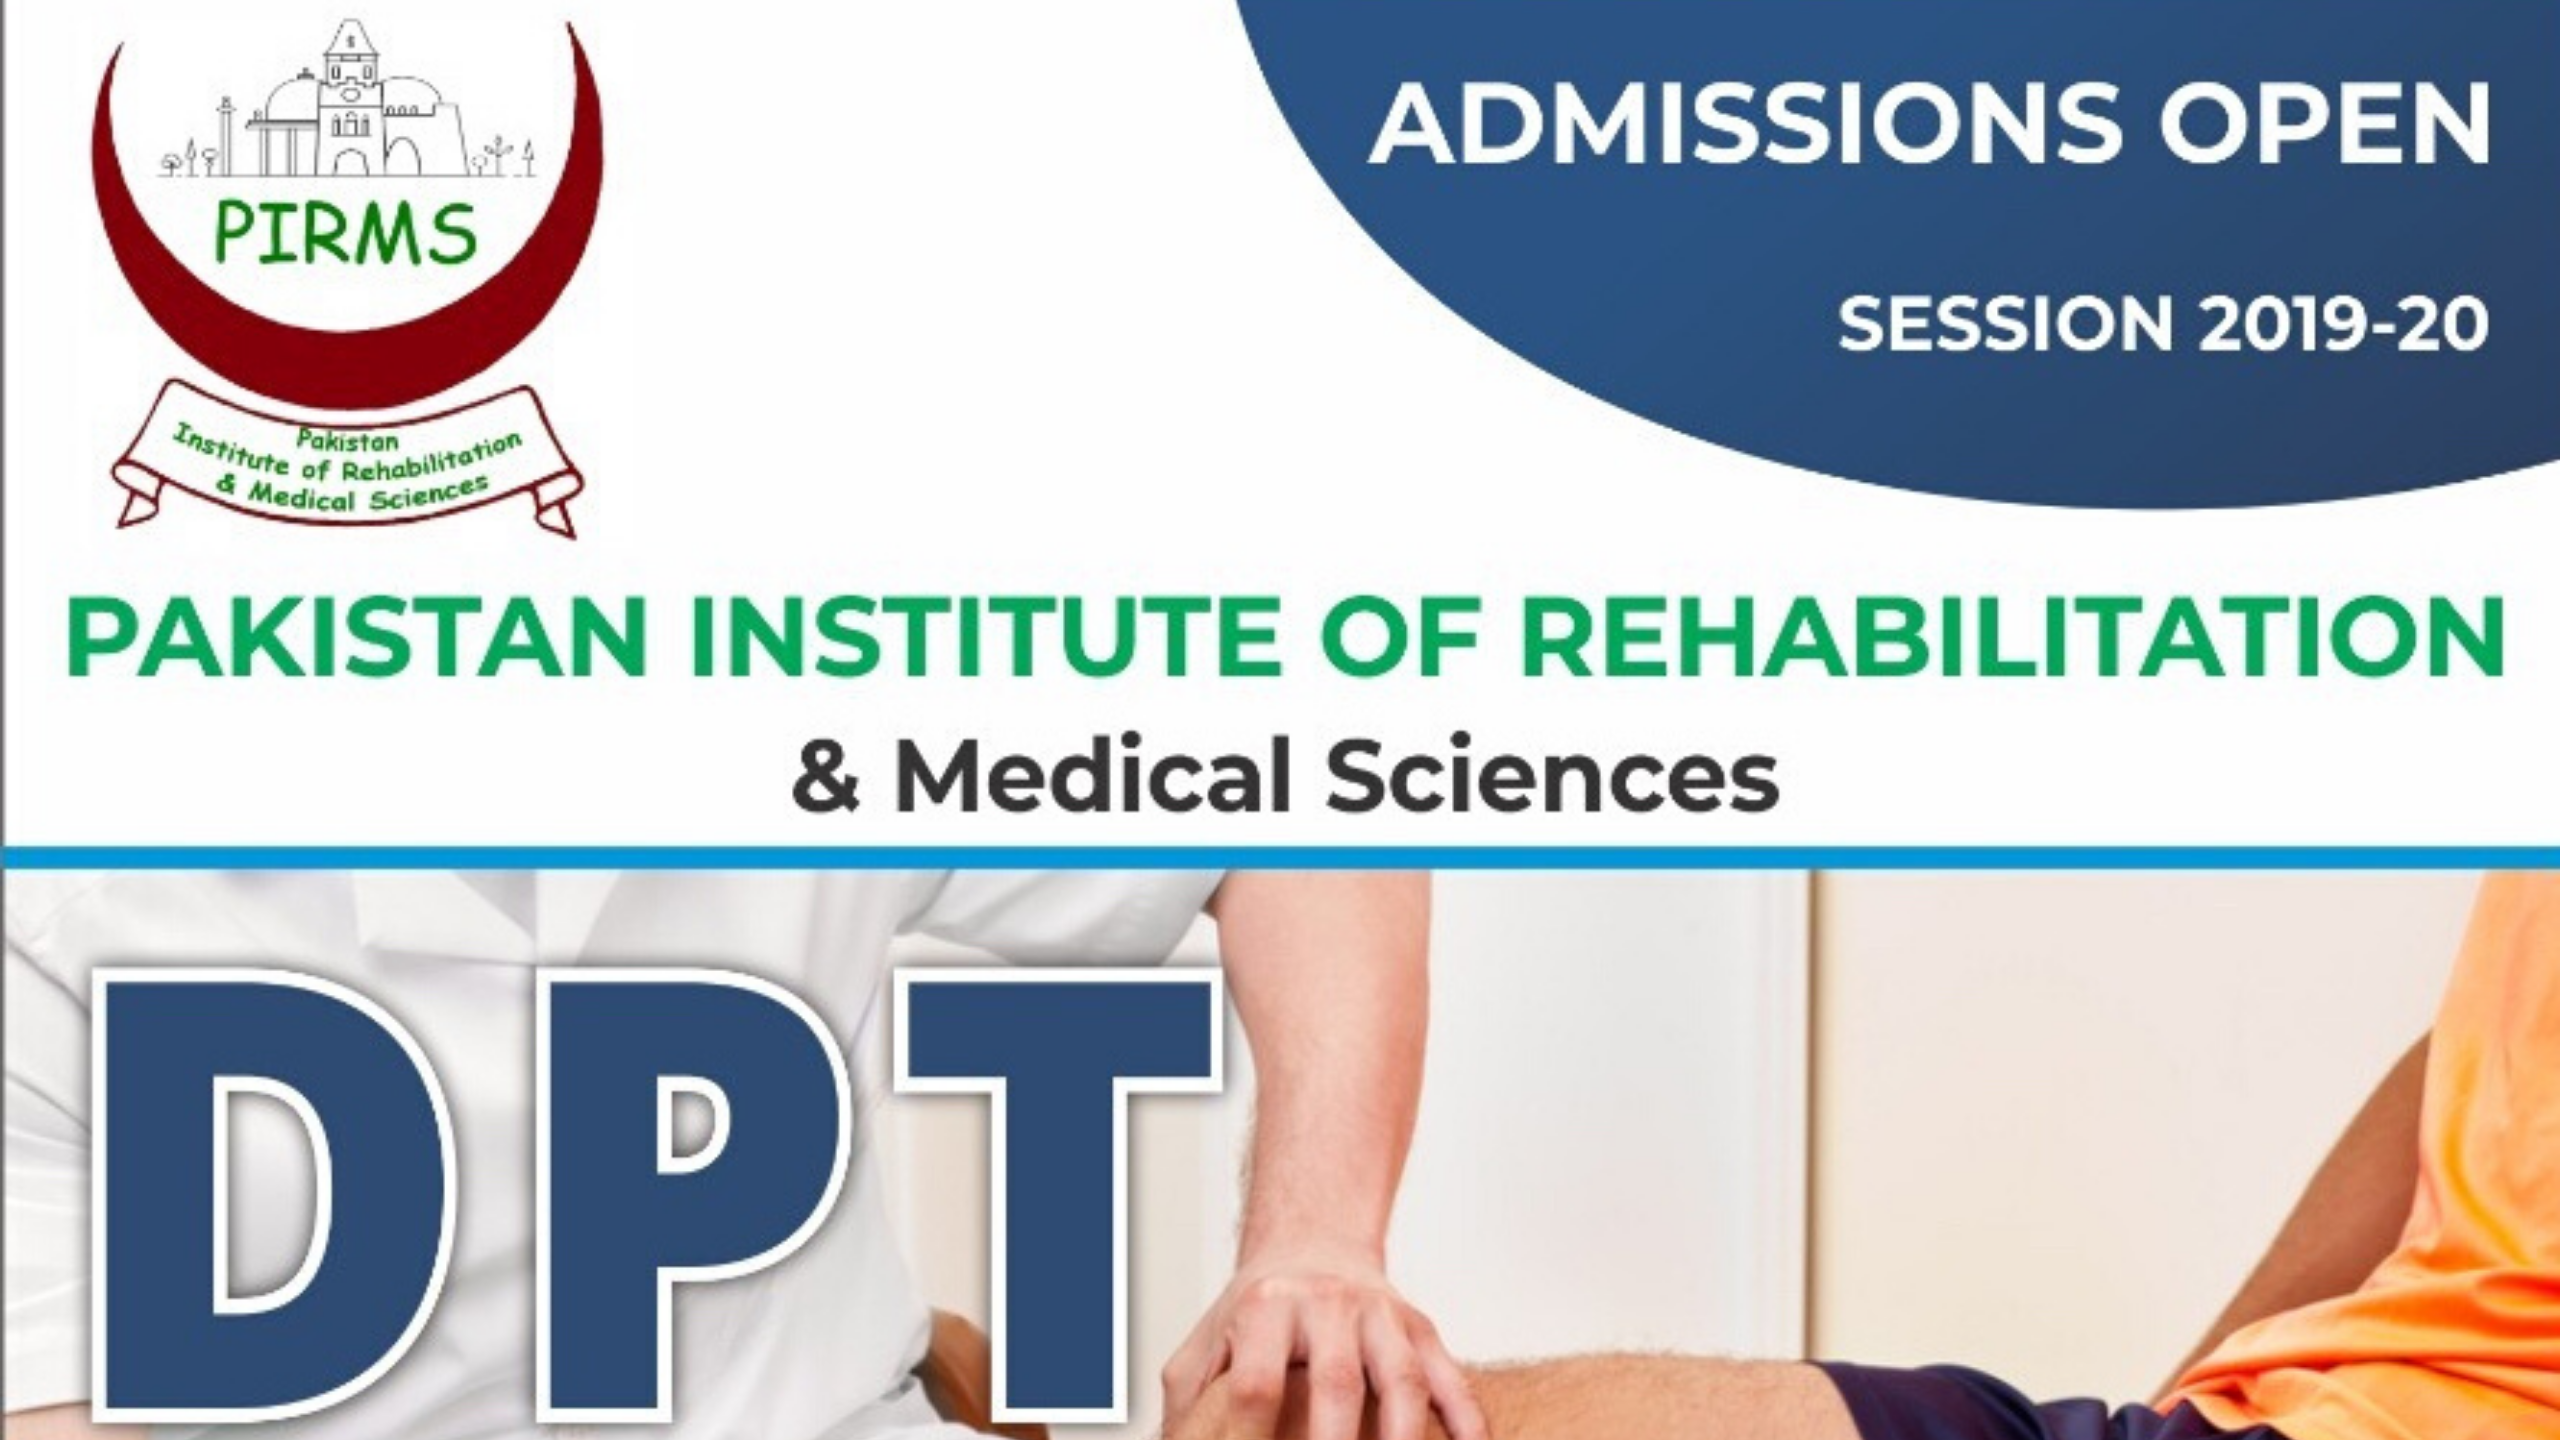 PIRMS Pakistan Institute of Rehabilitation and Medical sciences Karachi